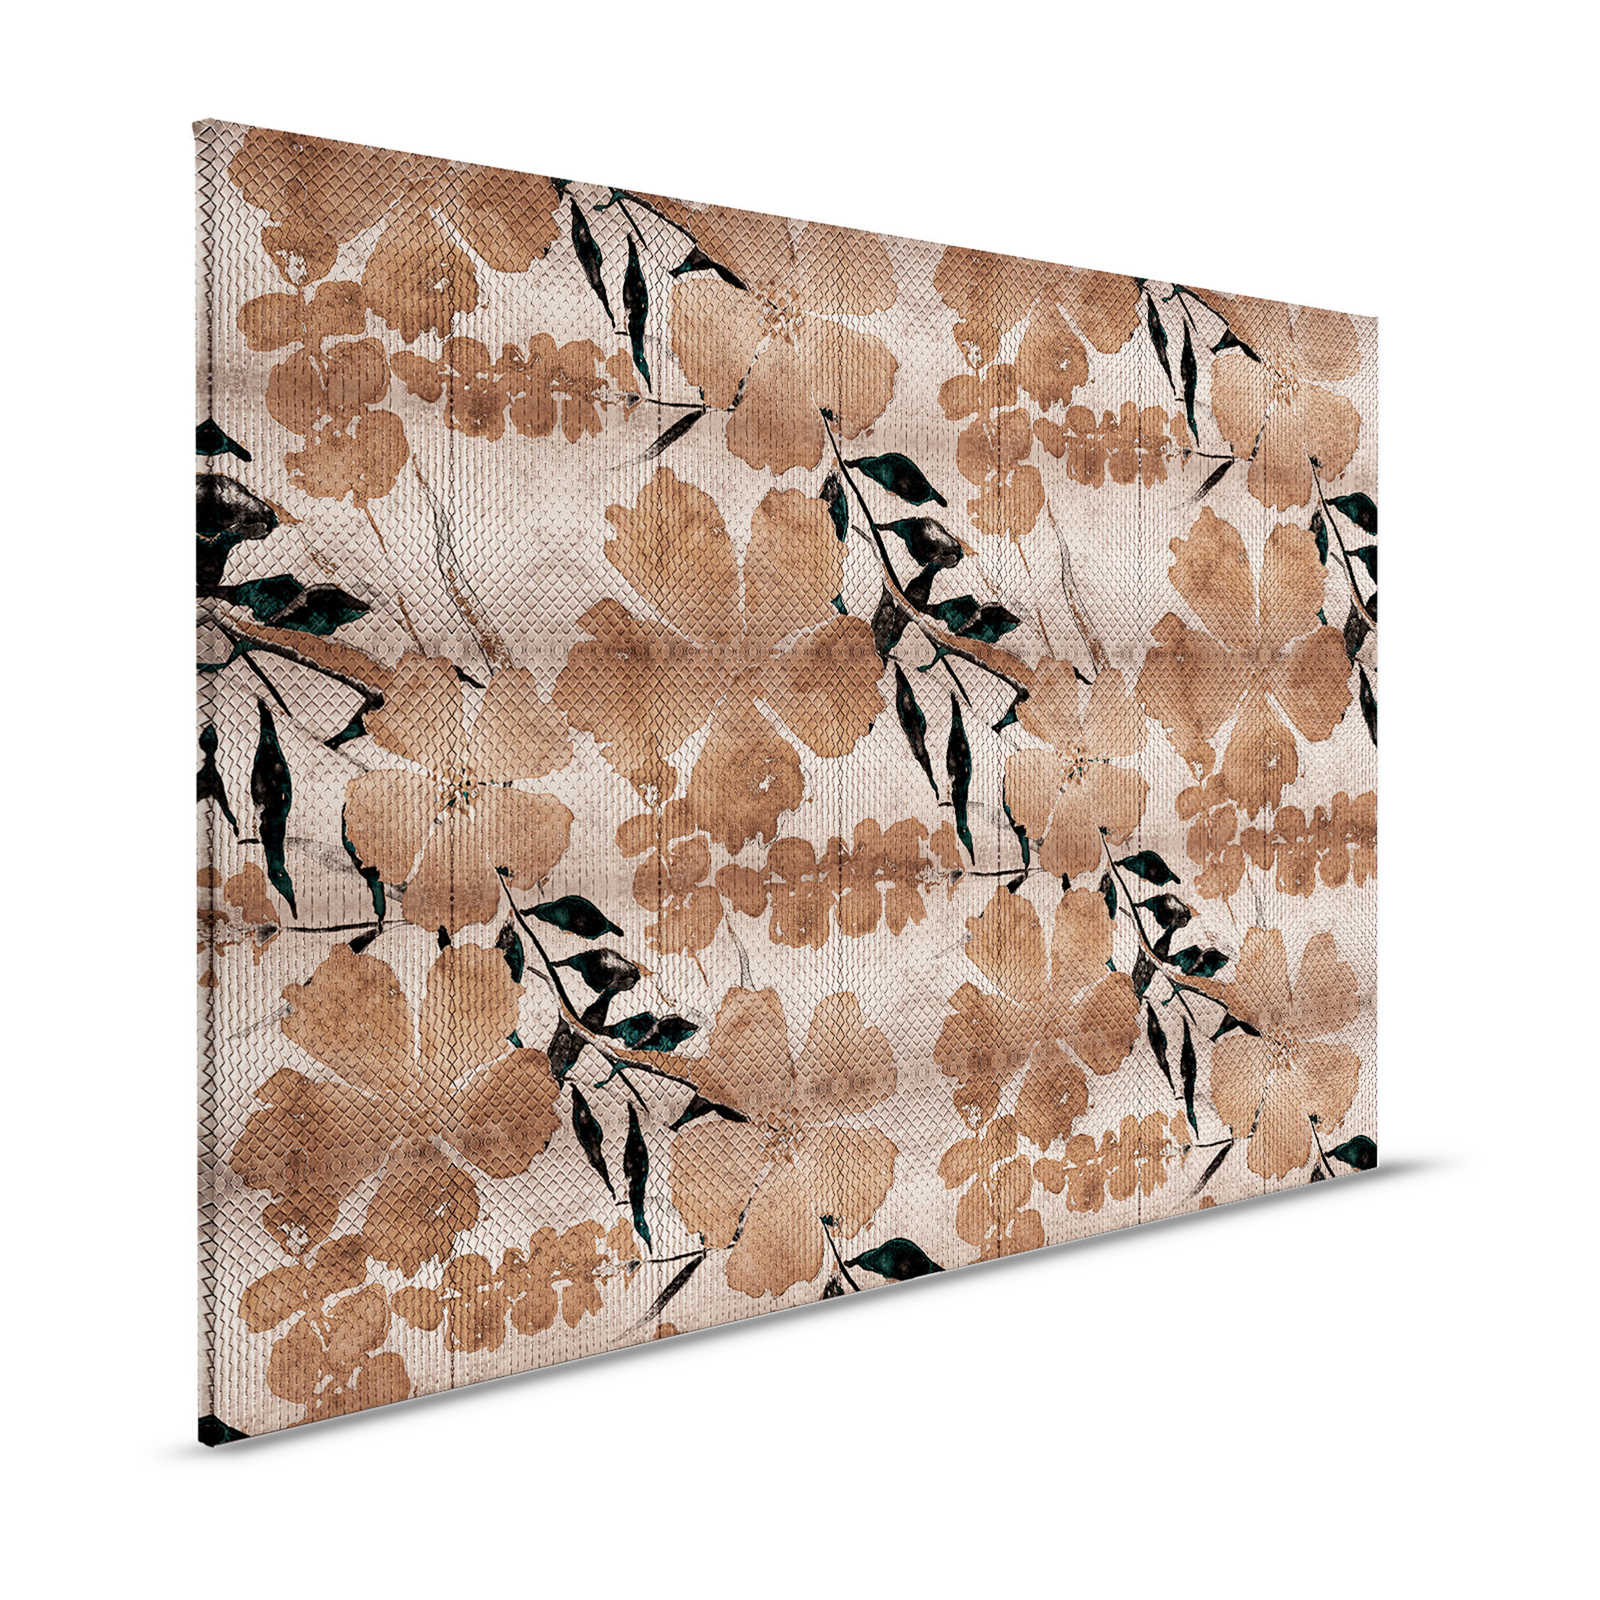 Odessa 2 - Metallic canvas print with cherry blossom pattern in copper - 1.20 m x 0.80 m
